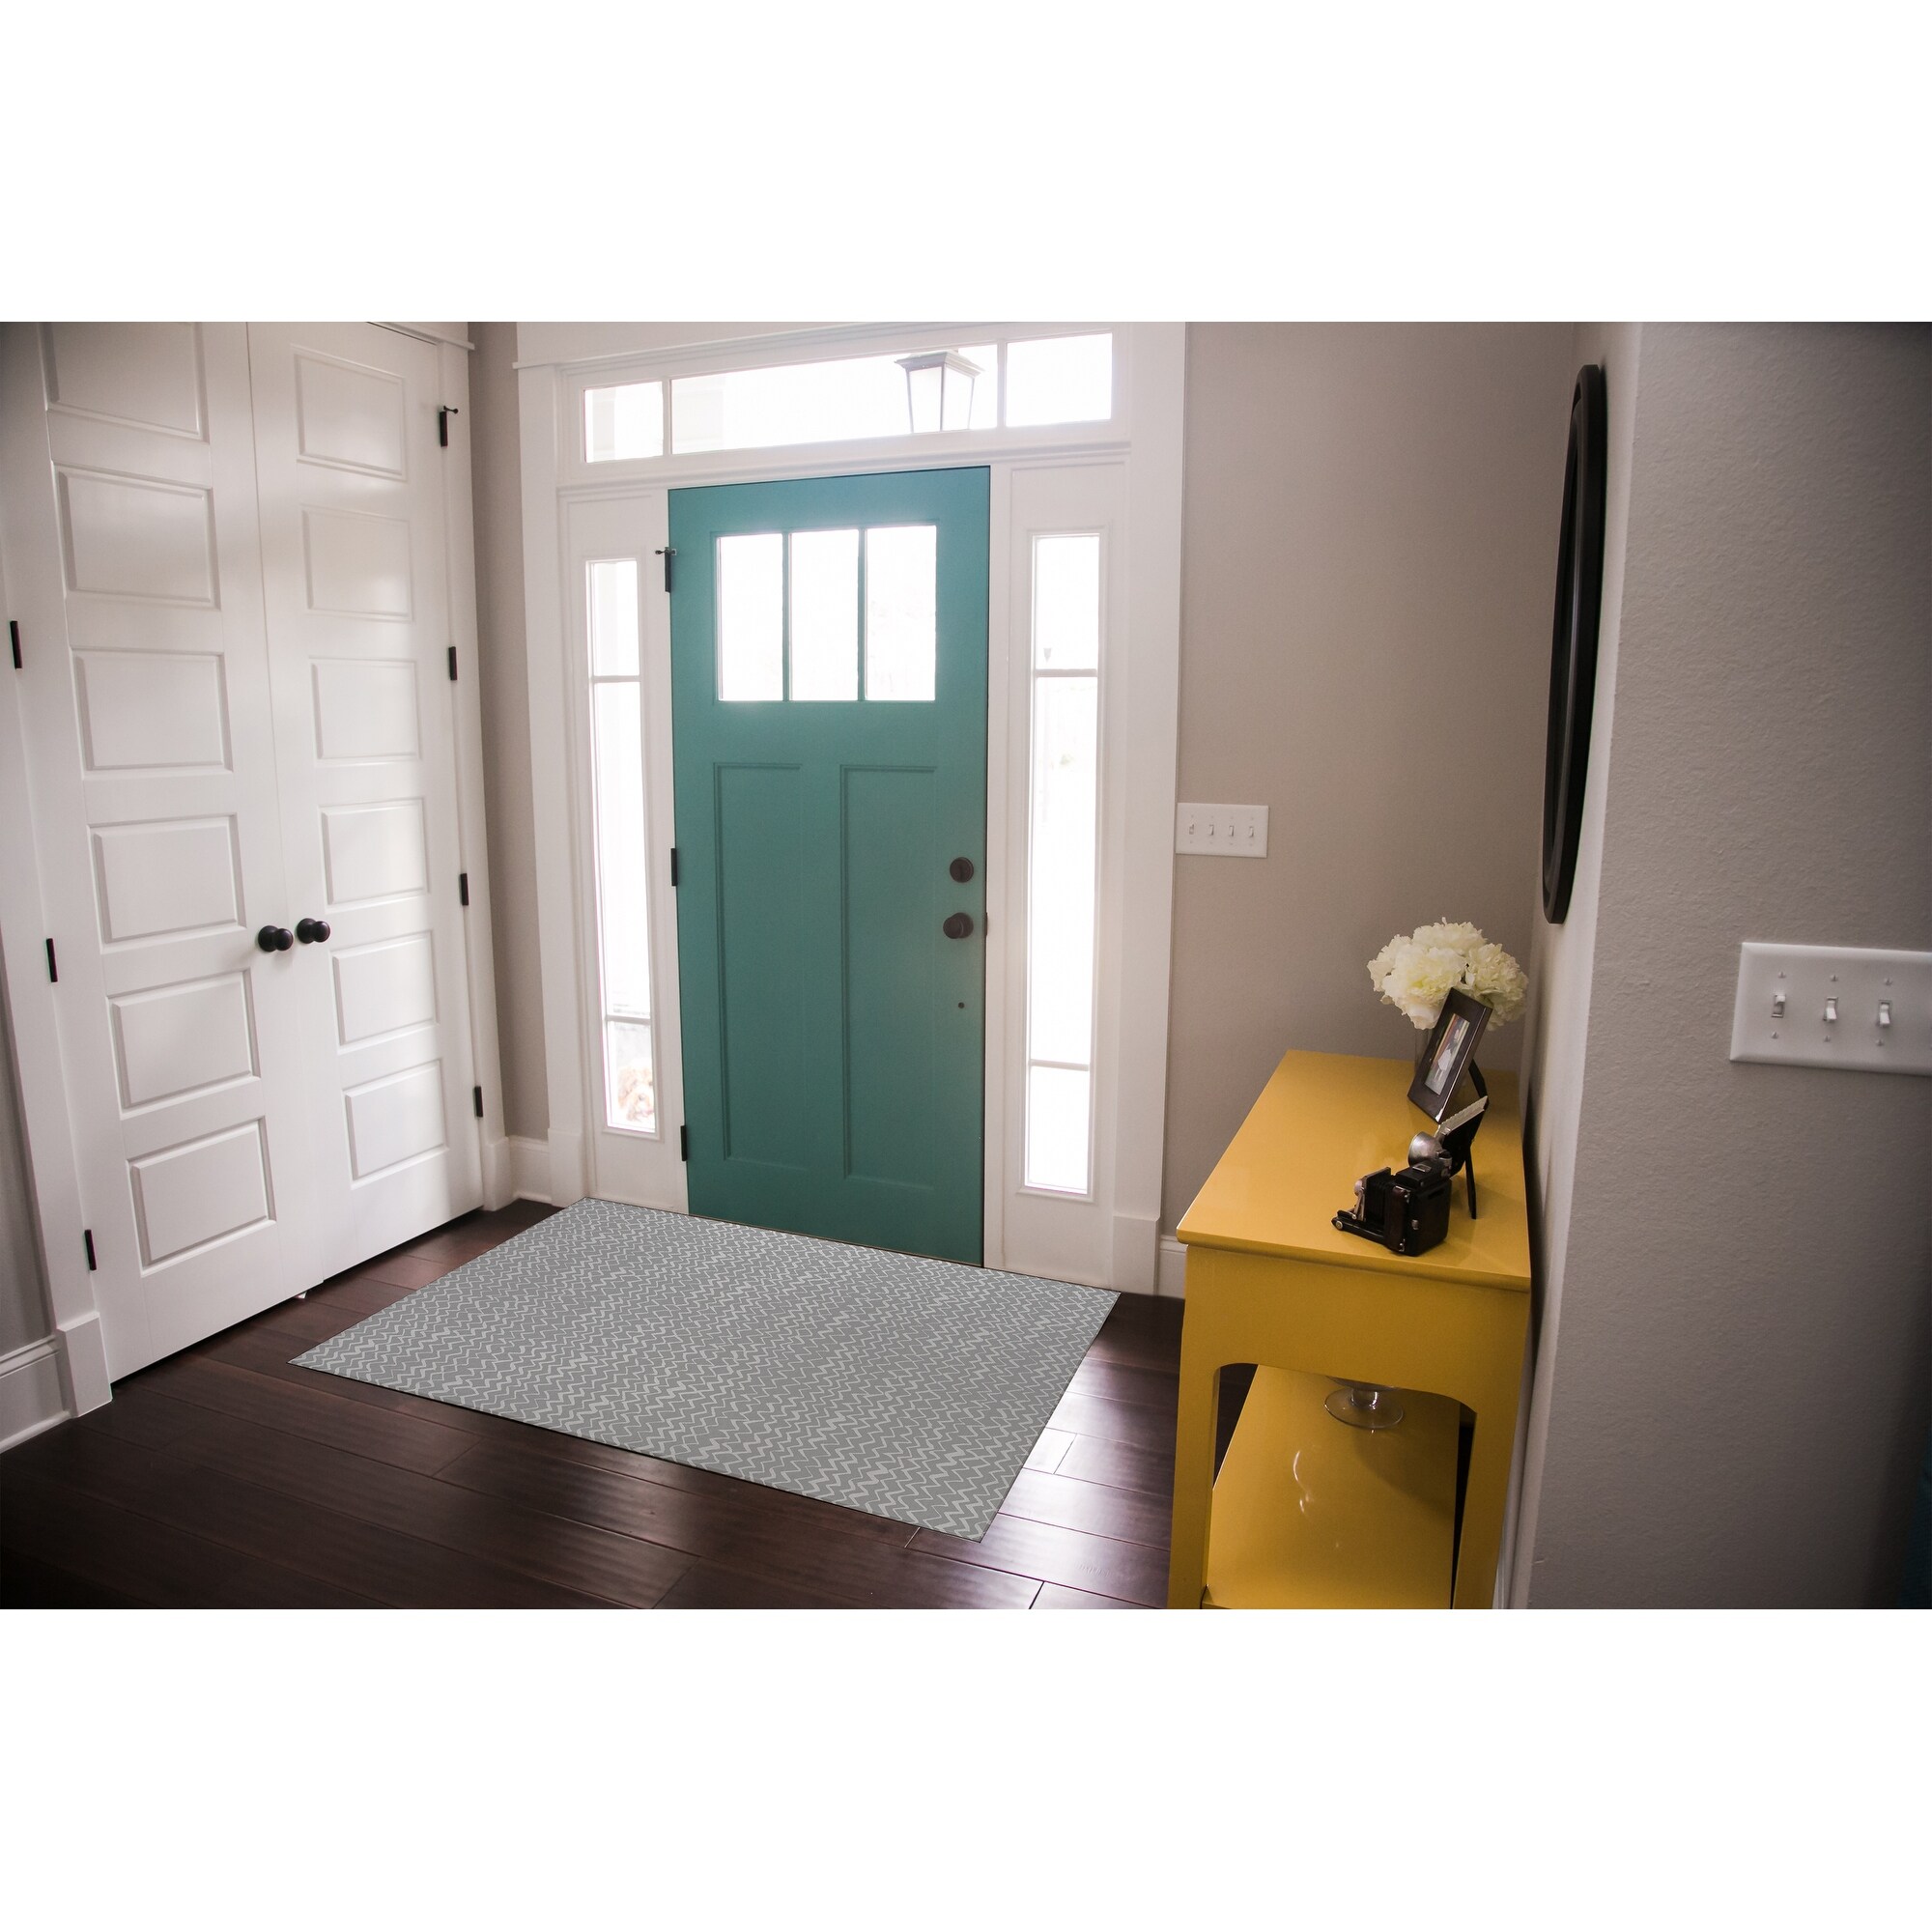 CHEVRON MOUNTAINS GREY Indoor Door Mat By Kavka Designs - Bed Bath & Beyond  - 31888658